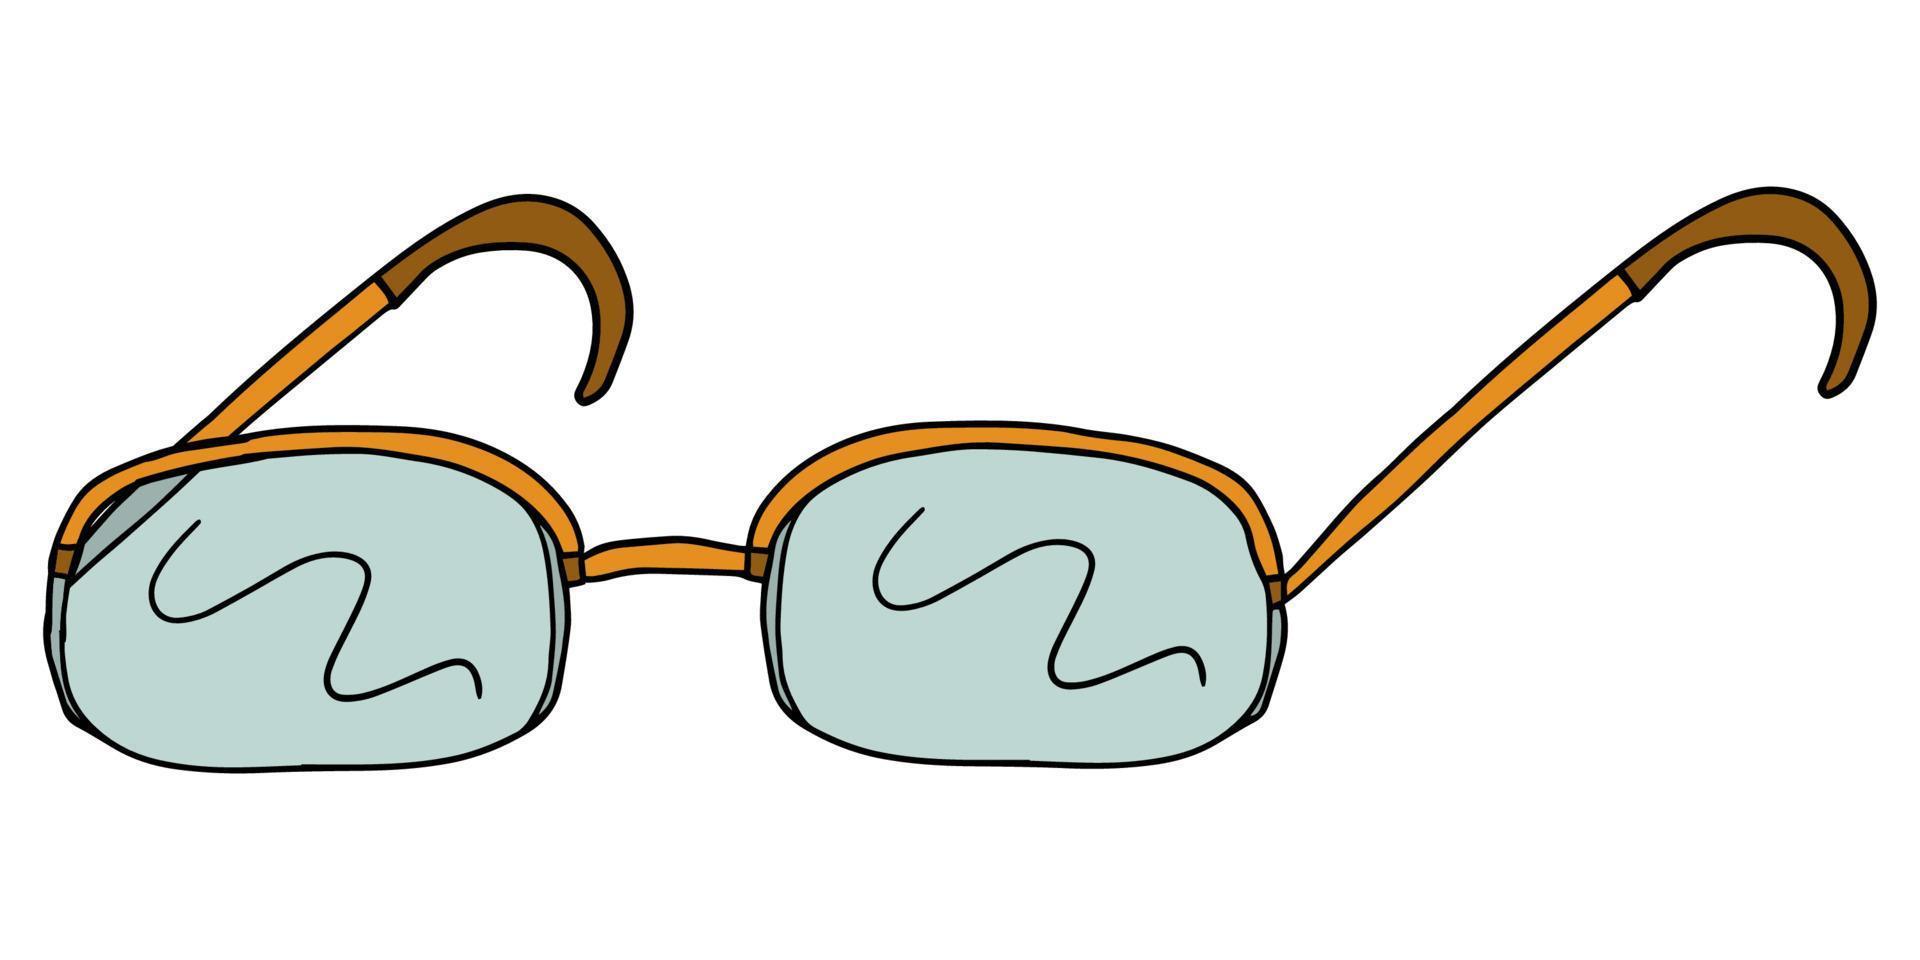 Cartoon hand drawn doodle eyeglasses vector